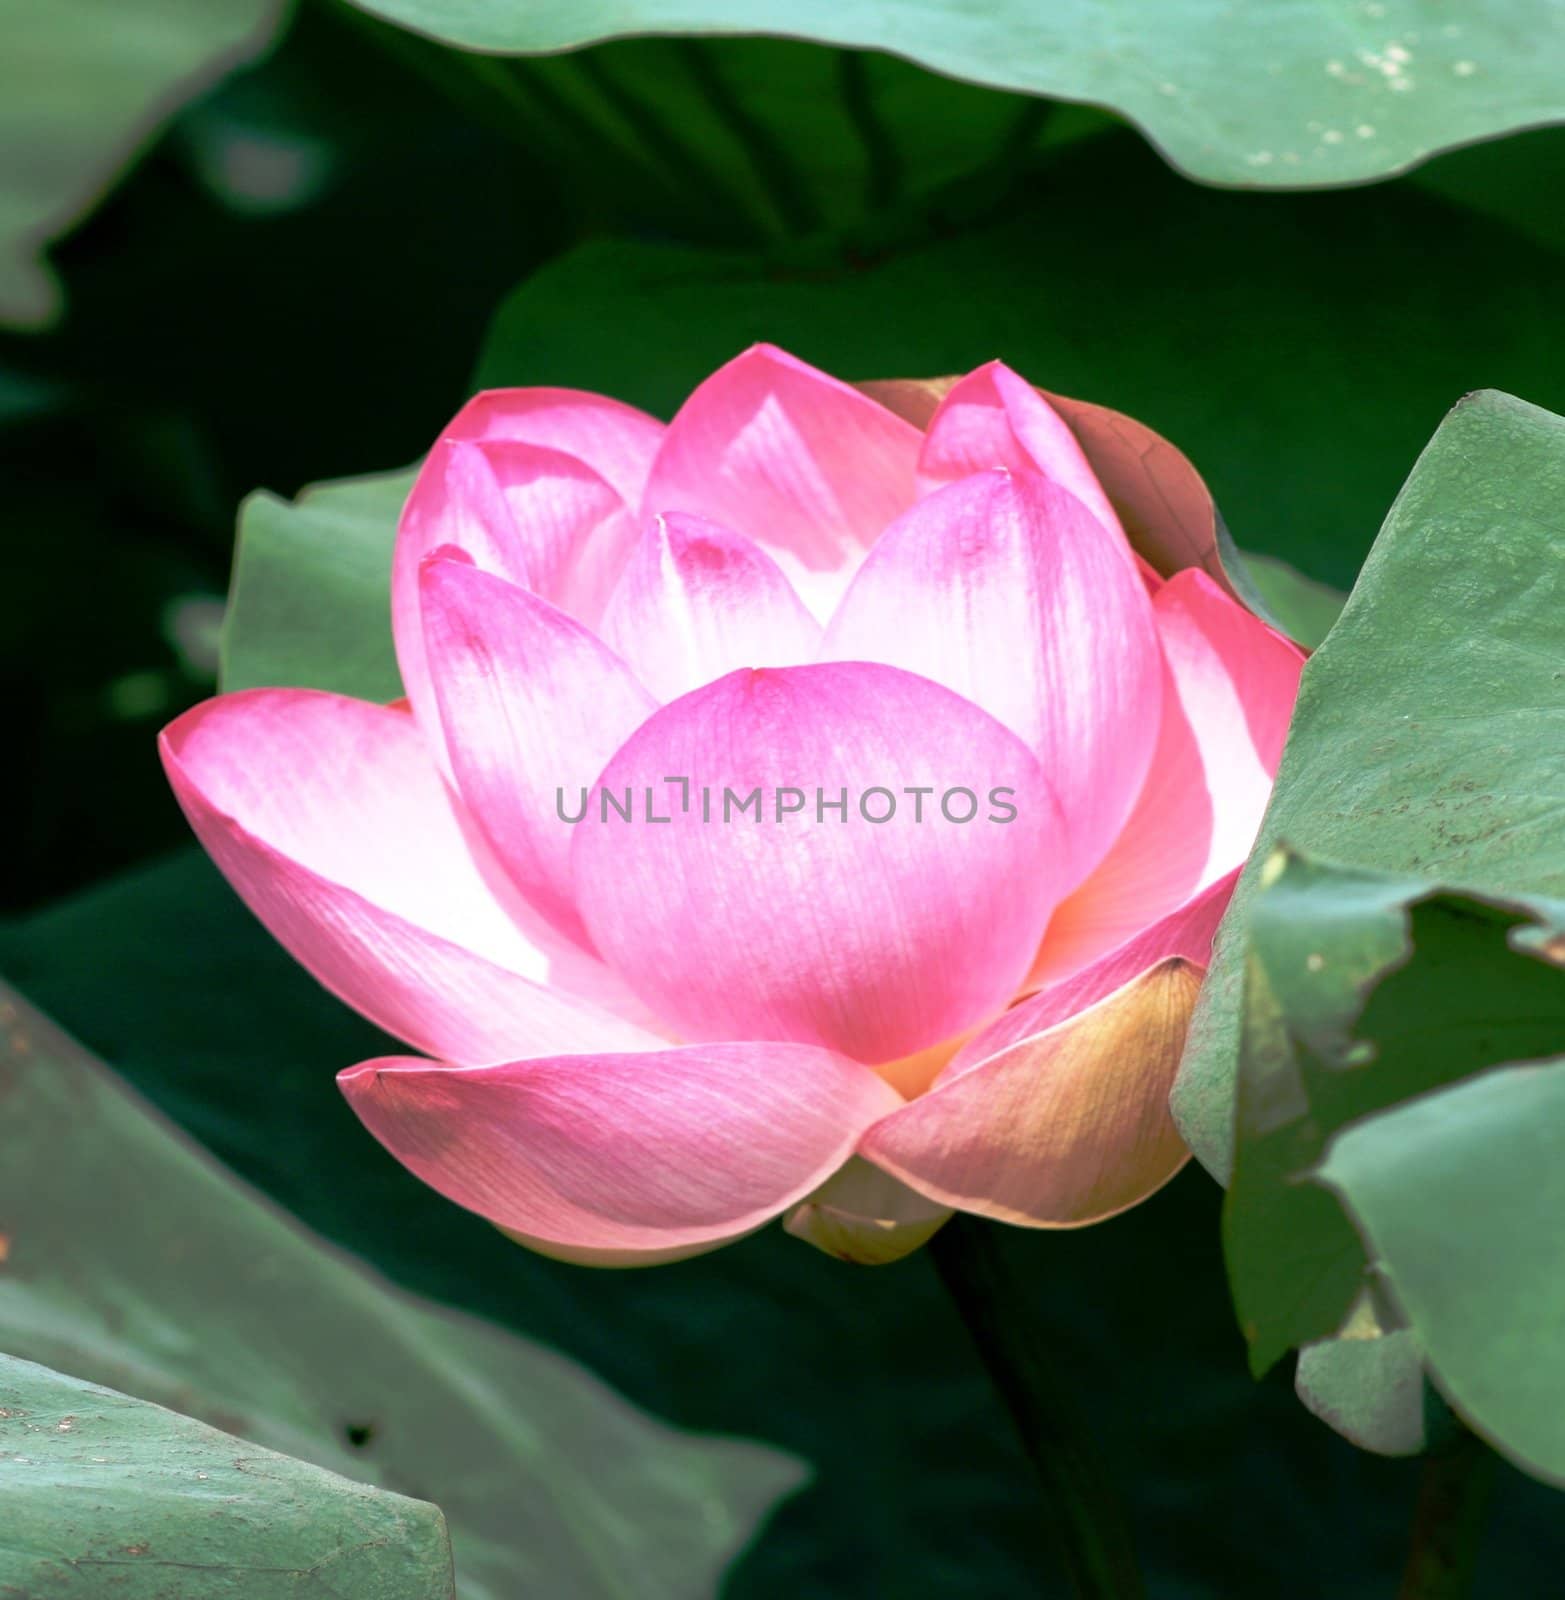 Lotus flower by adrianocastelli